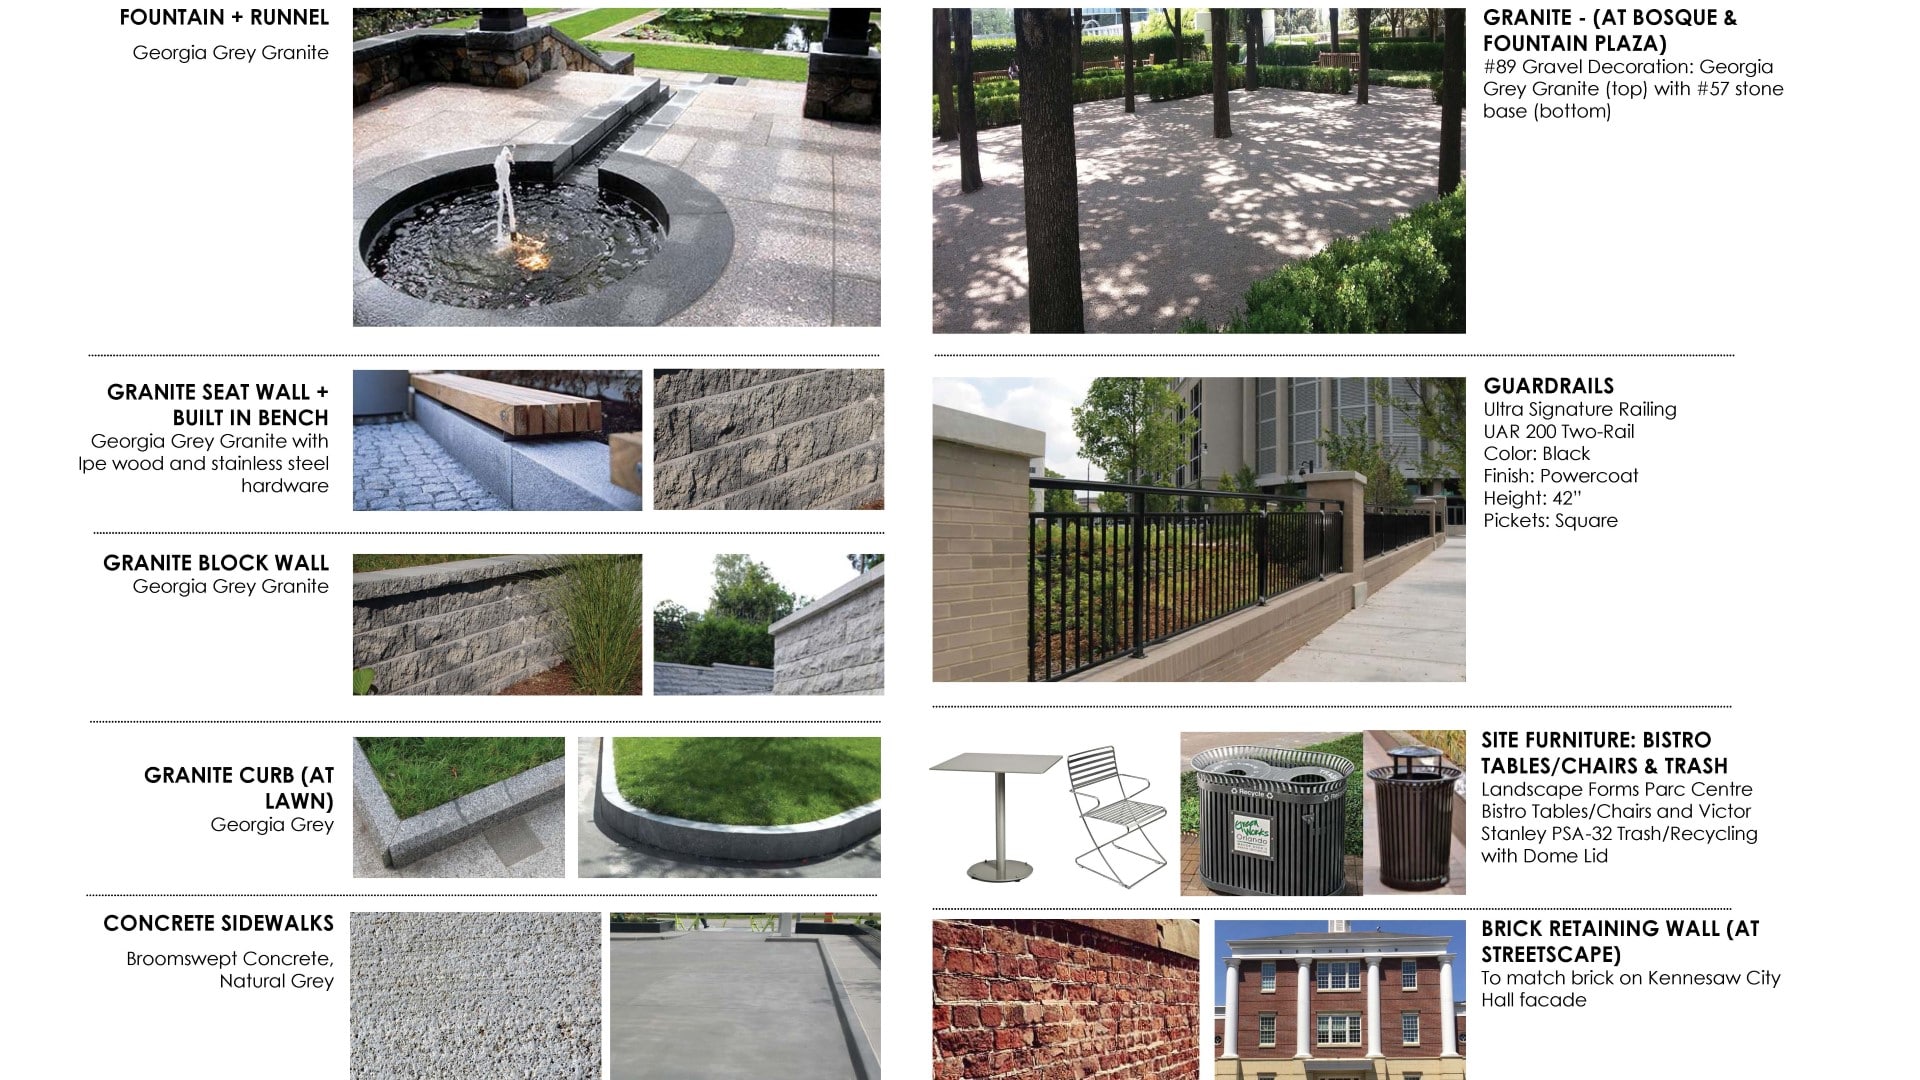 Kennesaw City Hall- TSW Planning Architecture Landscape Architecture, Atlanta